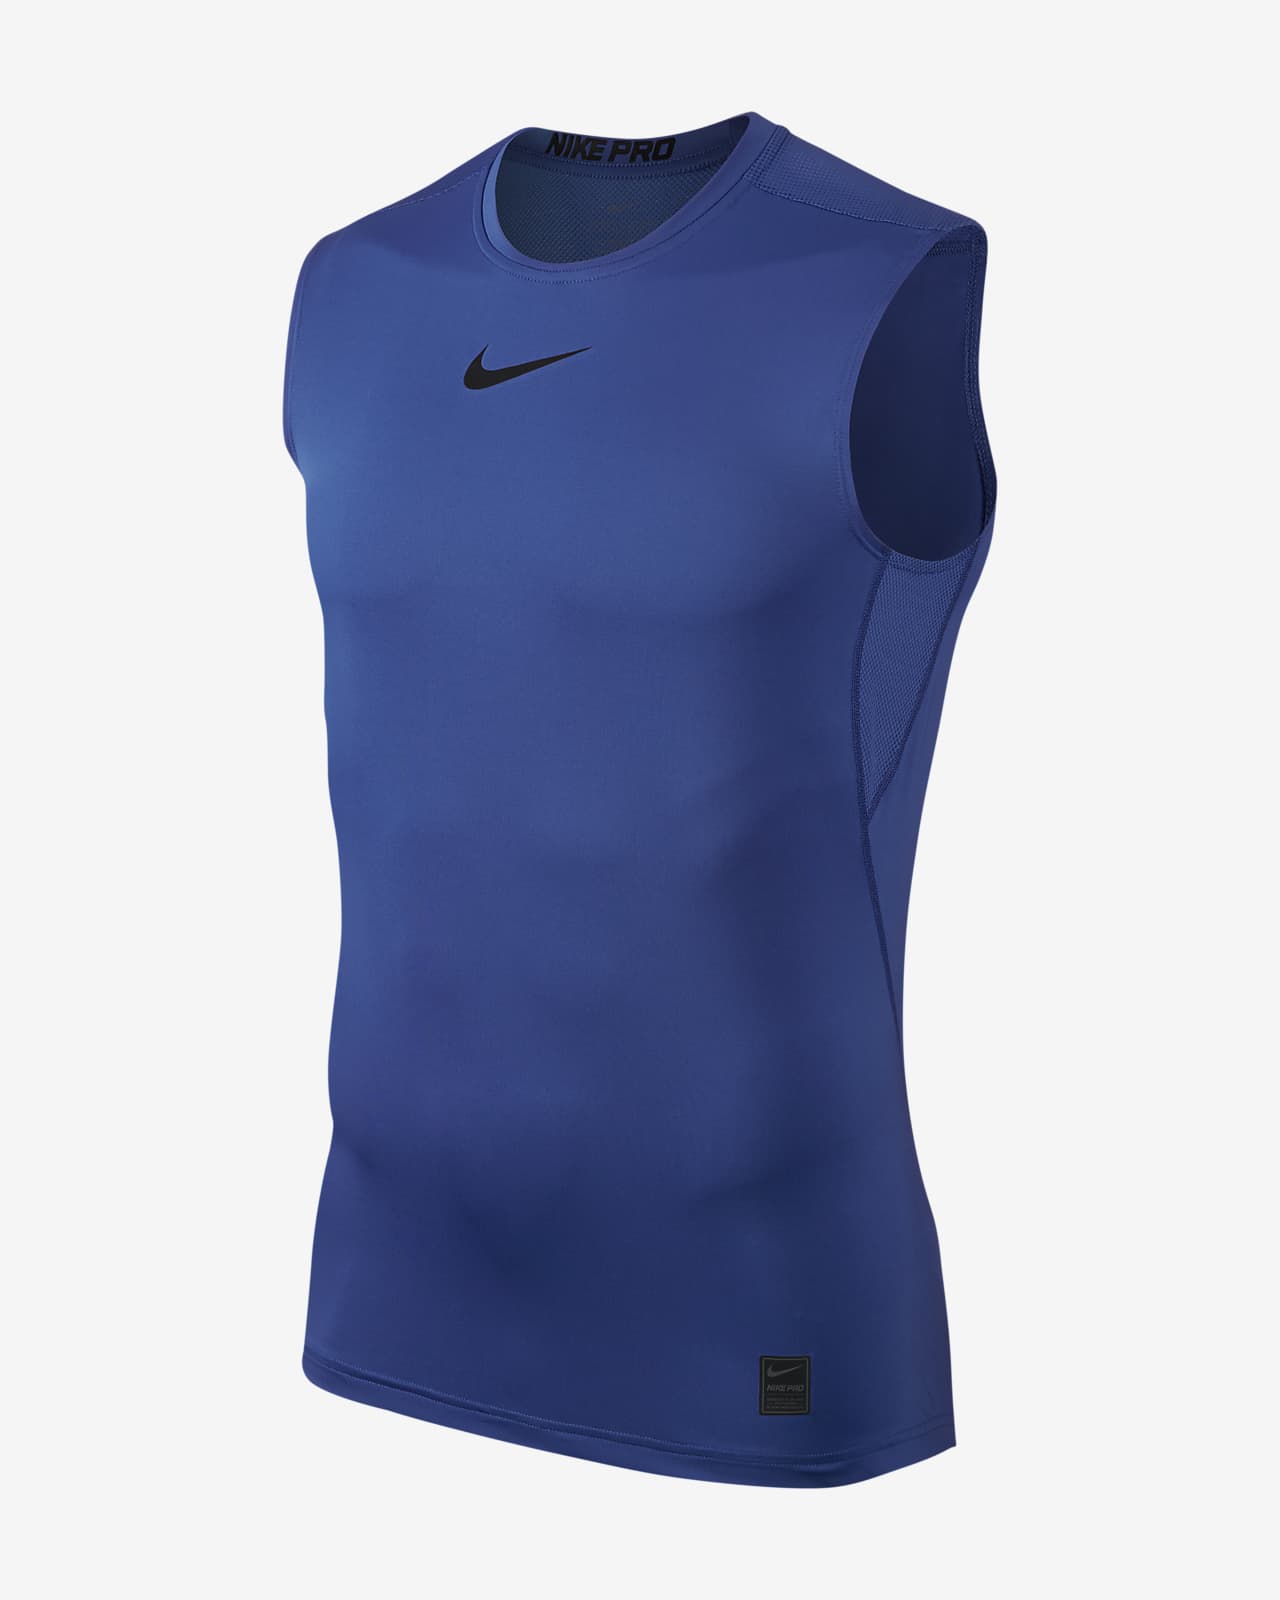 Nike Pro Fitted 男子无袖训练上衣